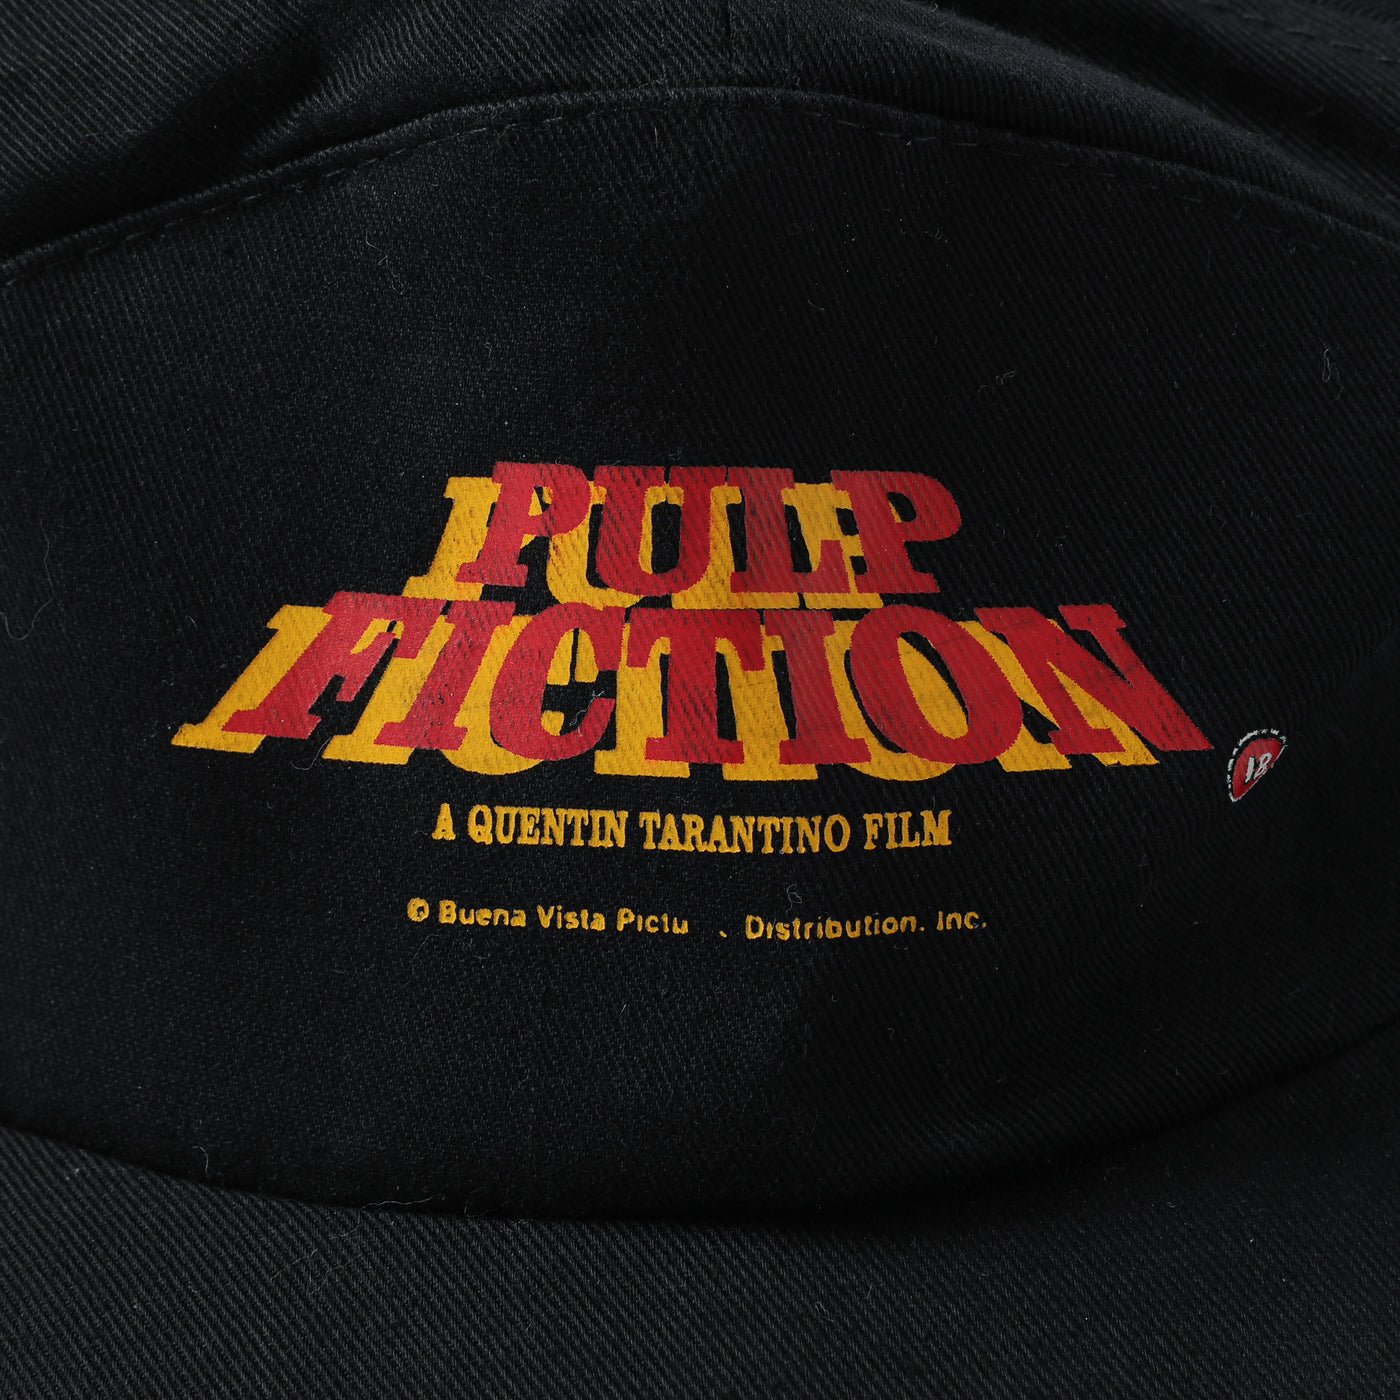 90s Pulp Fiction cap